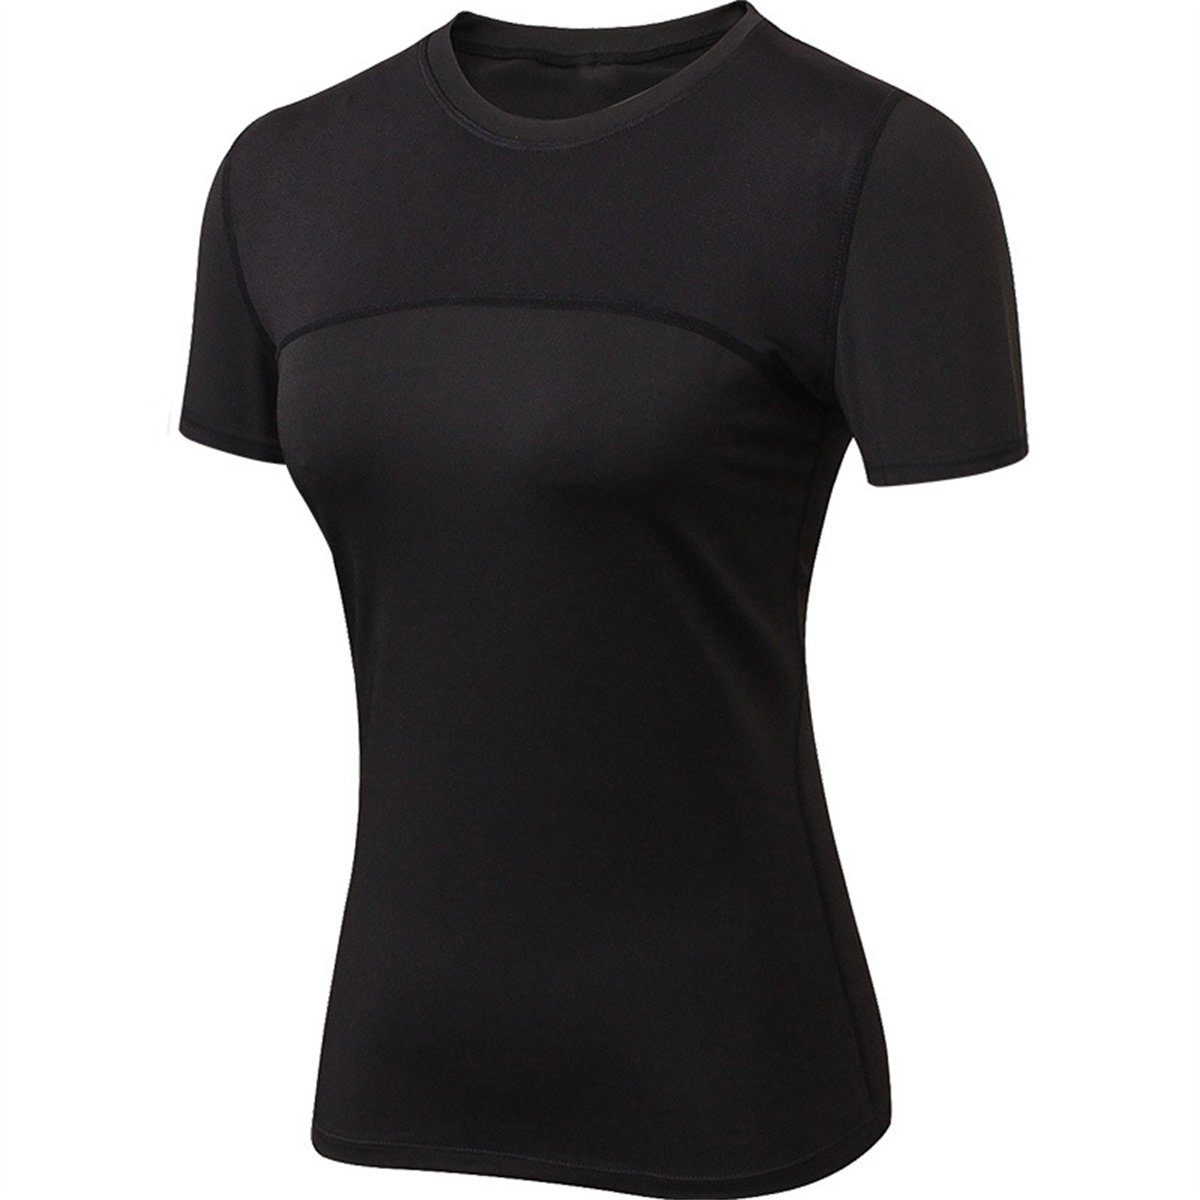 Damen Schwarz selected Shirt carefully Feuchtigkeitsableitendes Performance-Yoga-Kurzarmoberteil Seamless für